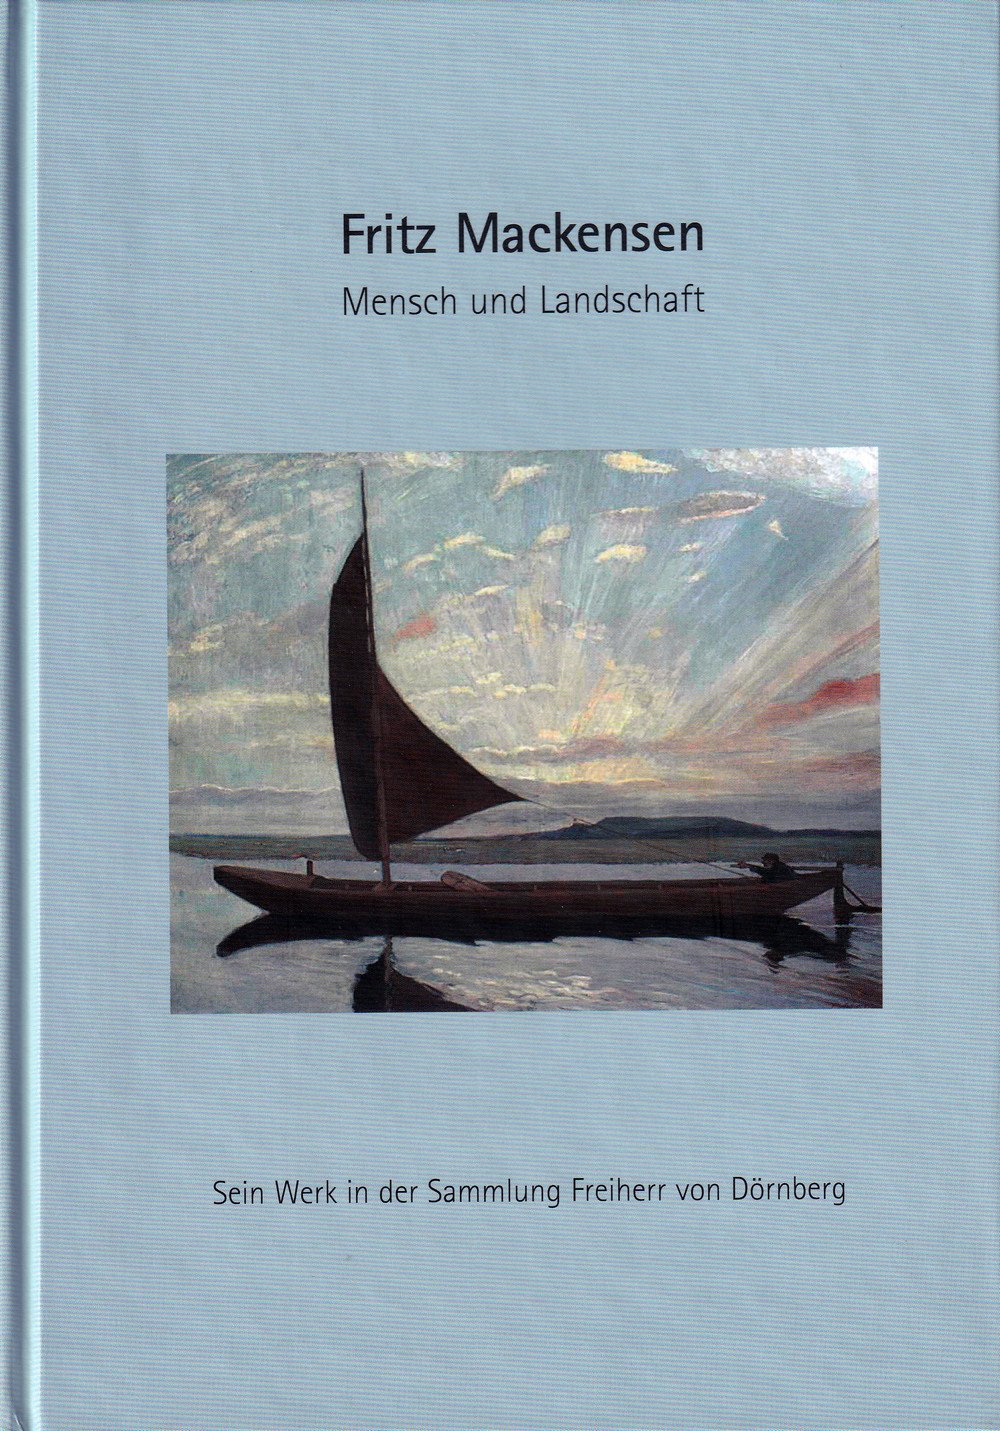 42668 Mackensen (Kulturverein Guntersblum CC BY-NC-SA)